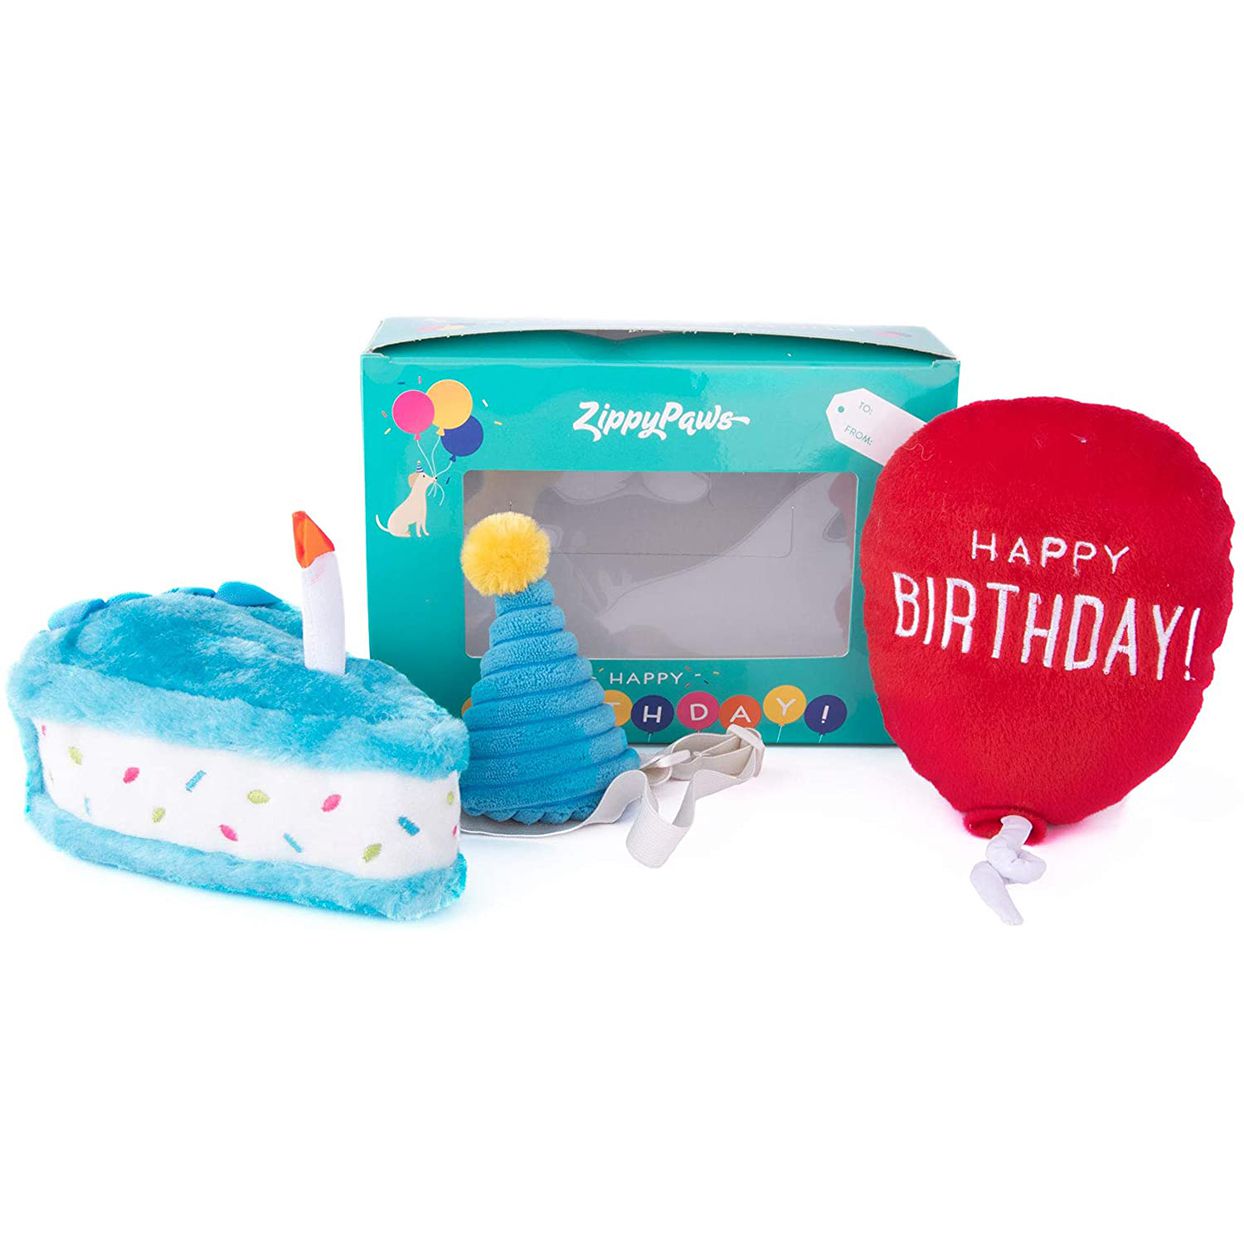 zippy paws birthday box